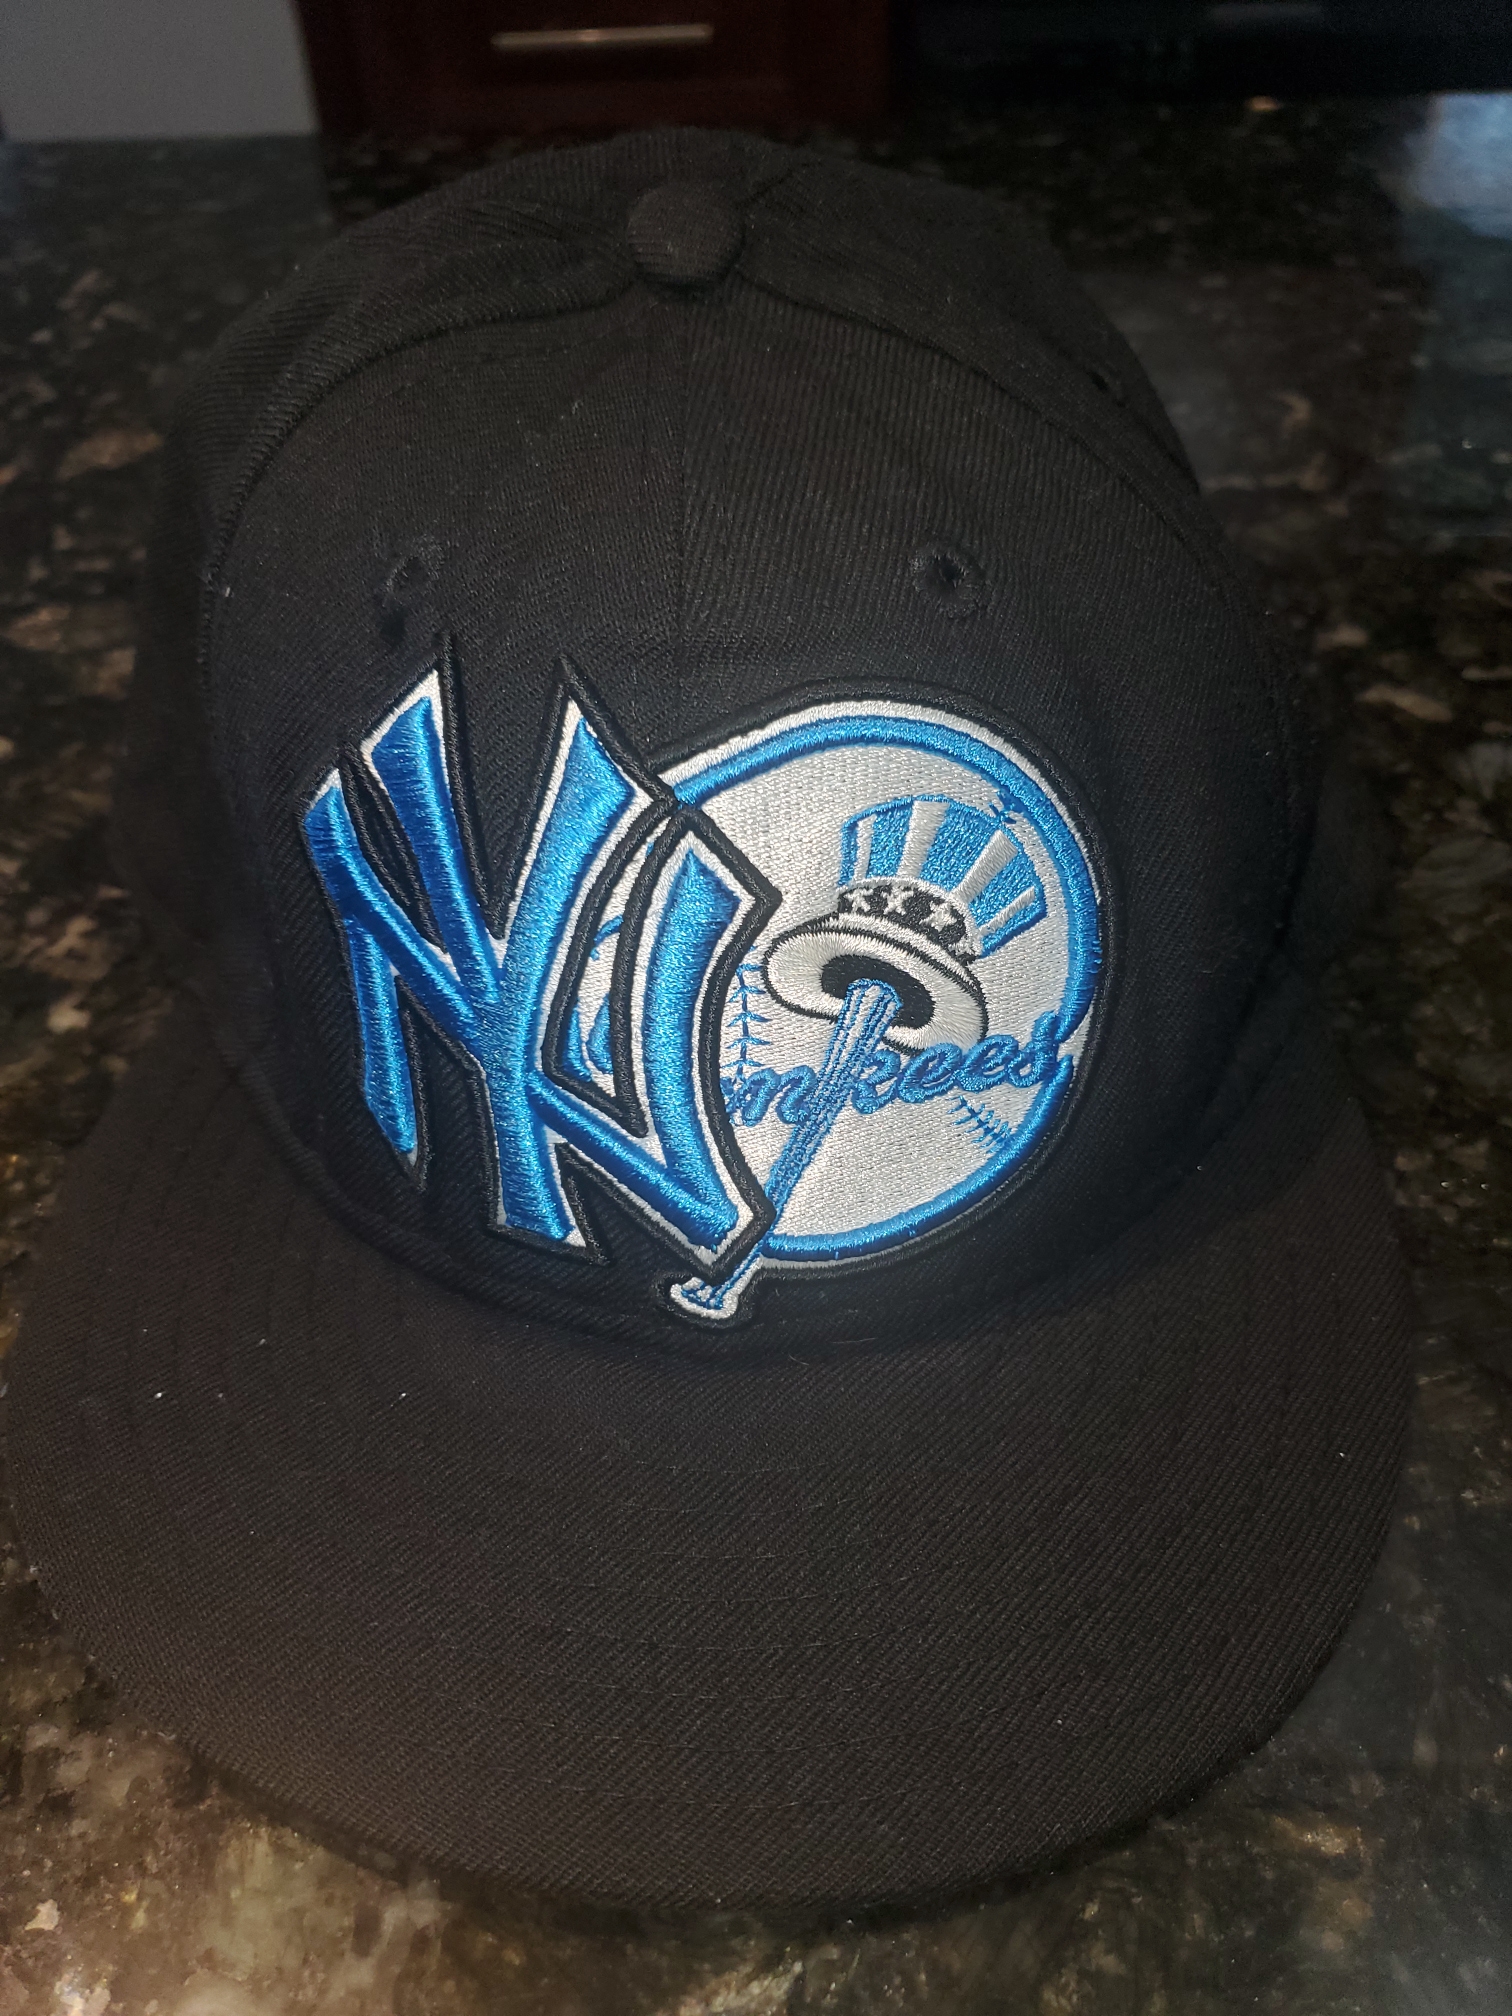 Vintage Hat "New York Yankees" Hat - Size 7 1 / 4